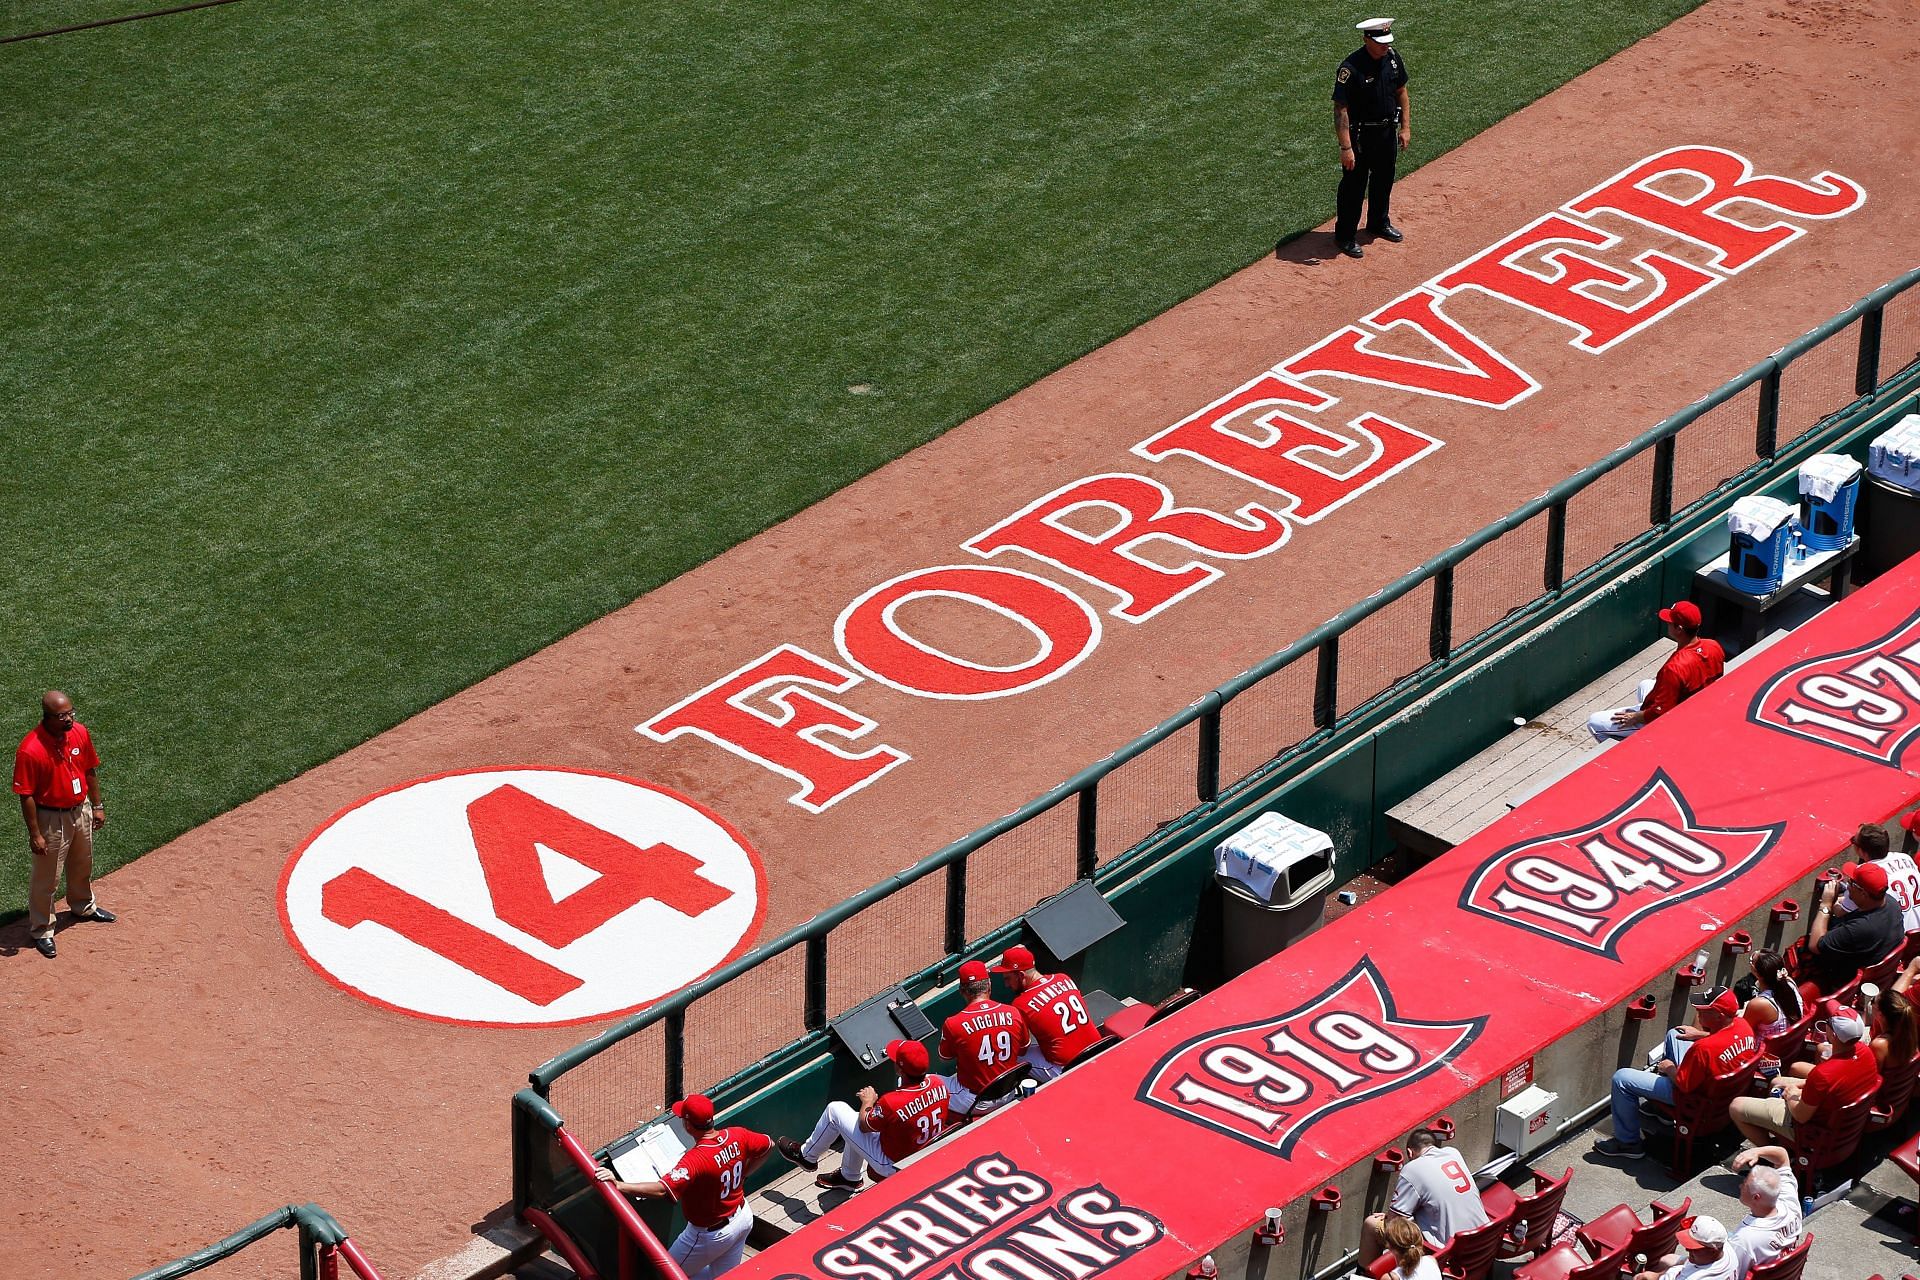 View of field signage honoring former Cincinnati Reds player Pete Rose during a game in Cincinnati.